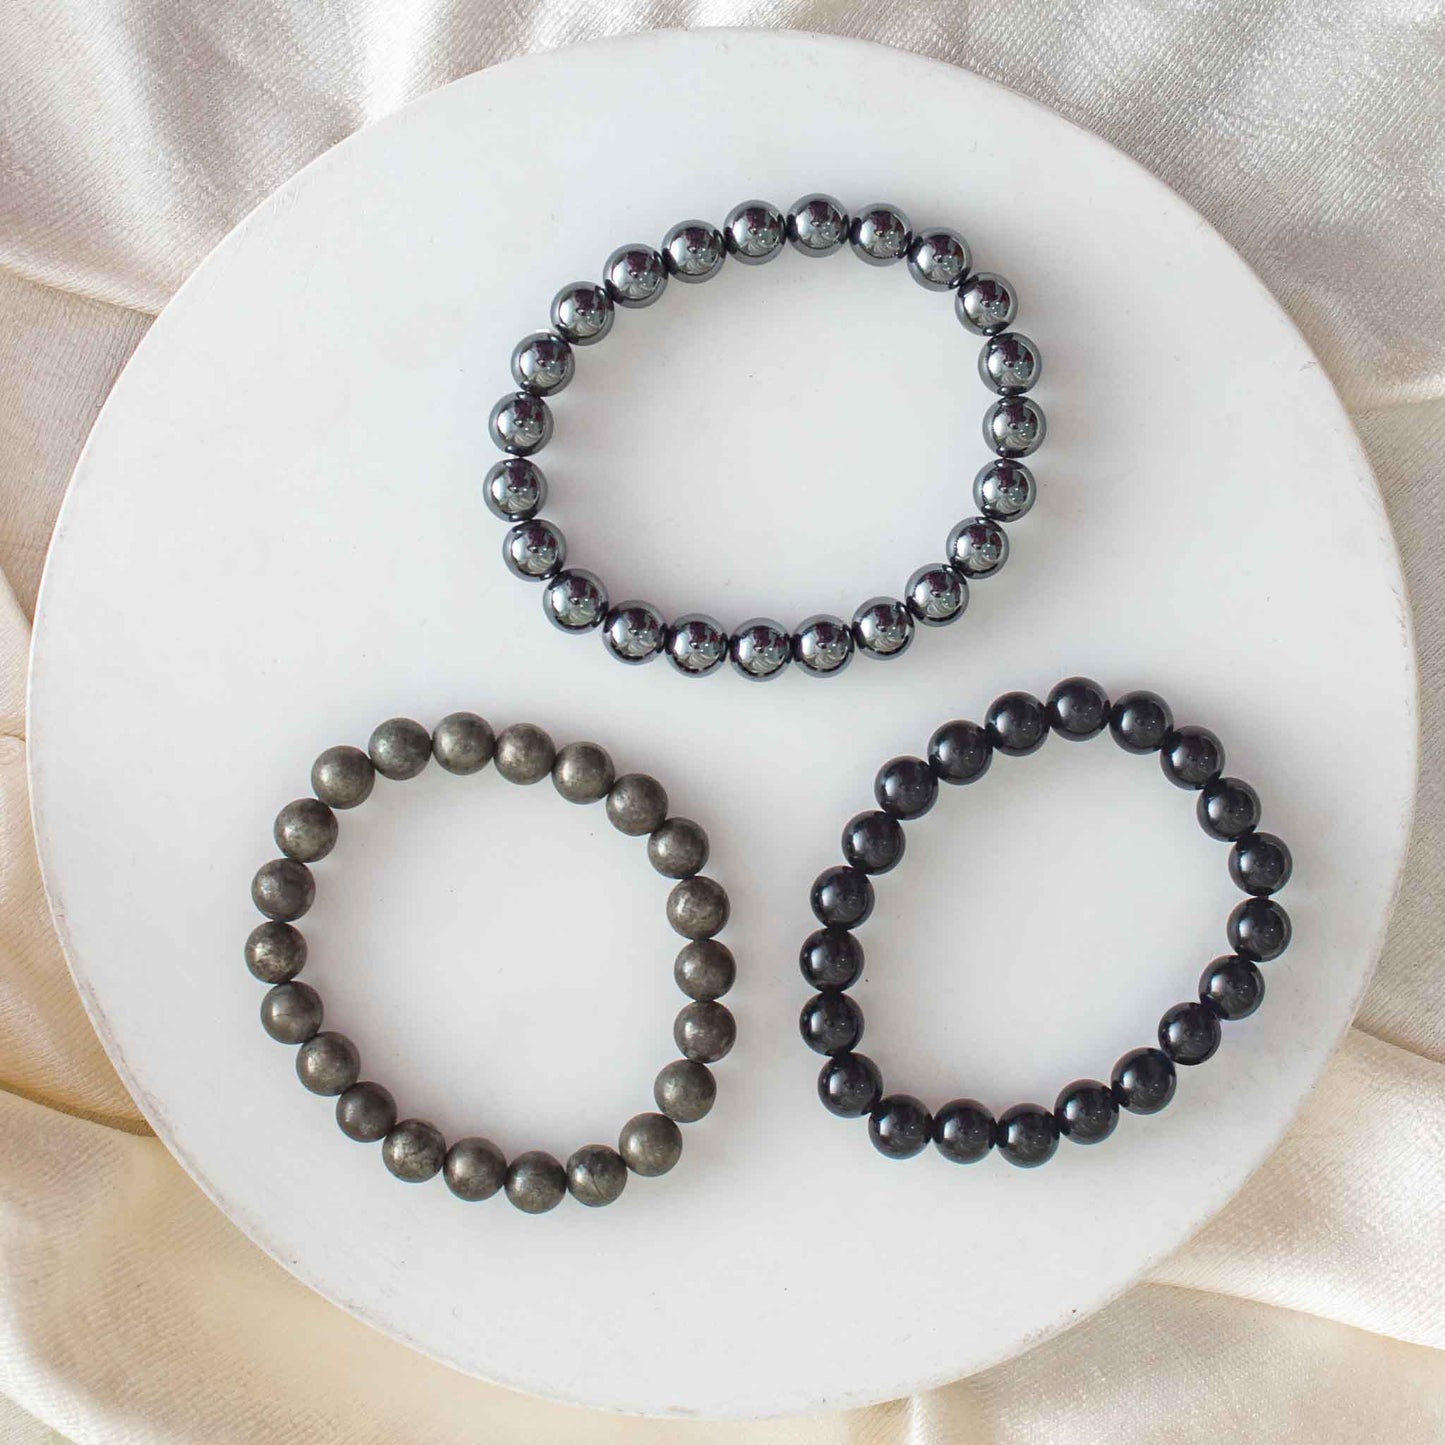 pyrite black tourmaline and hematite bracelet sets